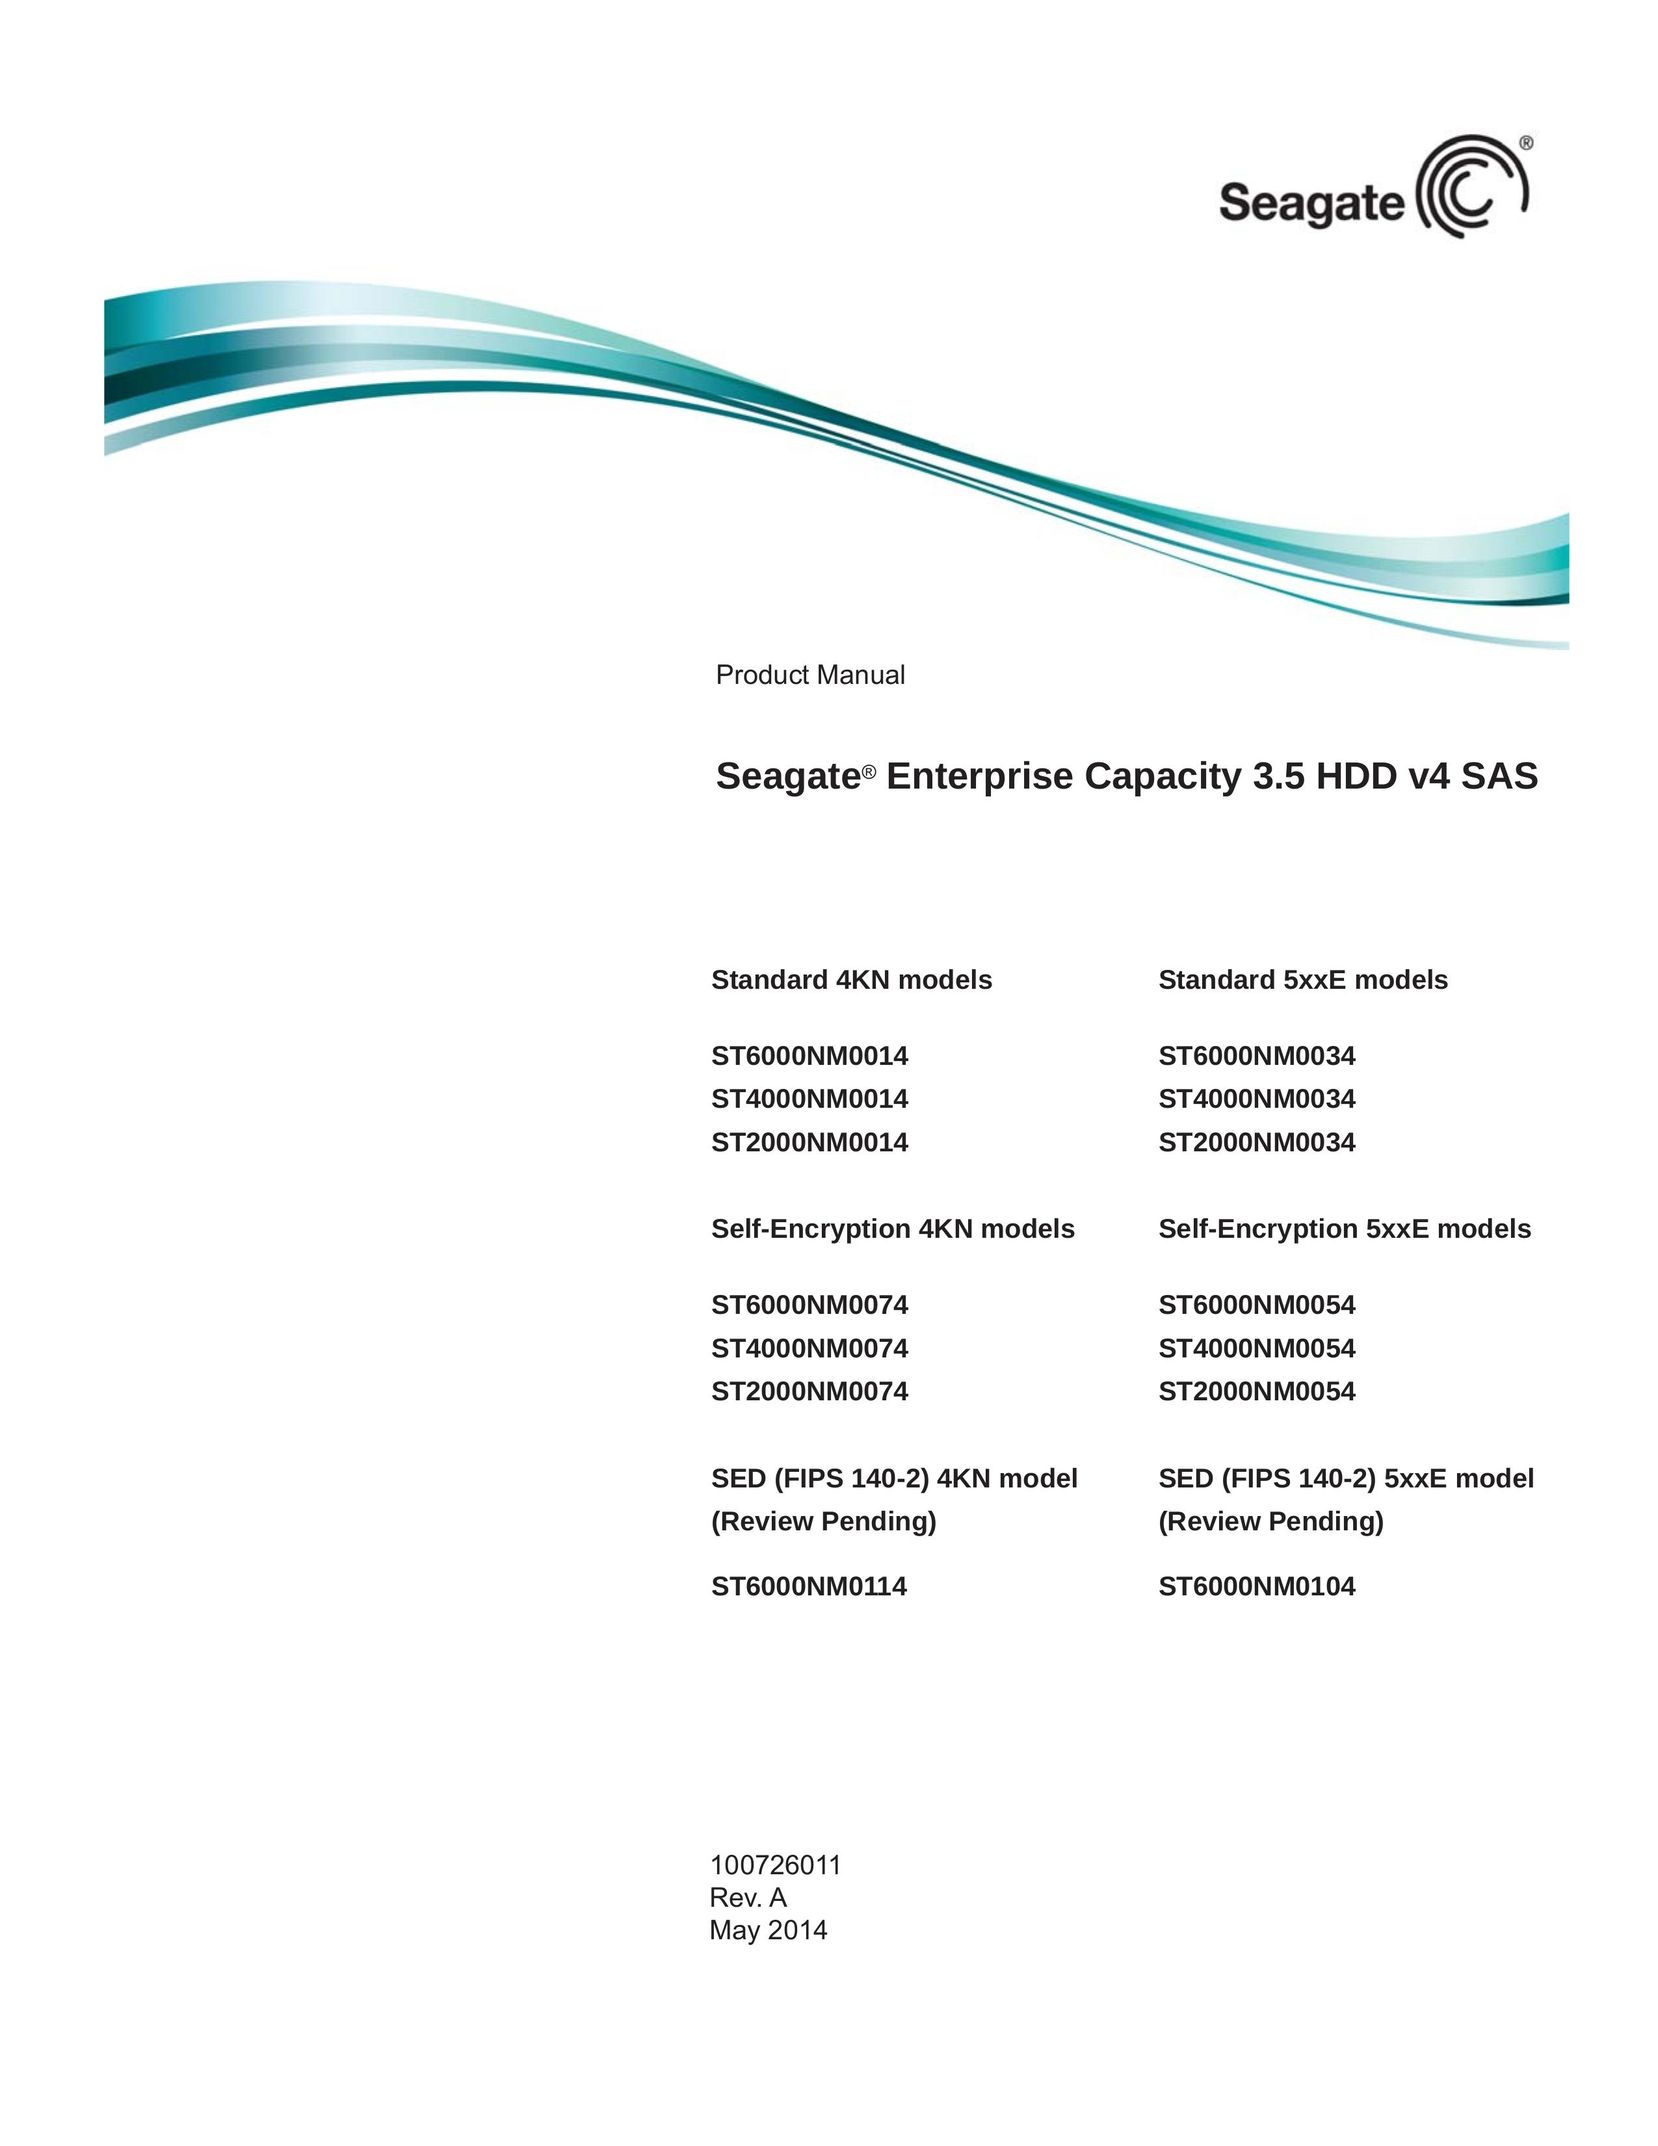 Seagate ST4000NM0014 Laptop User Manual